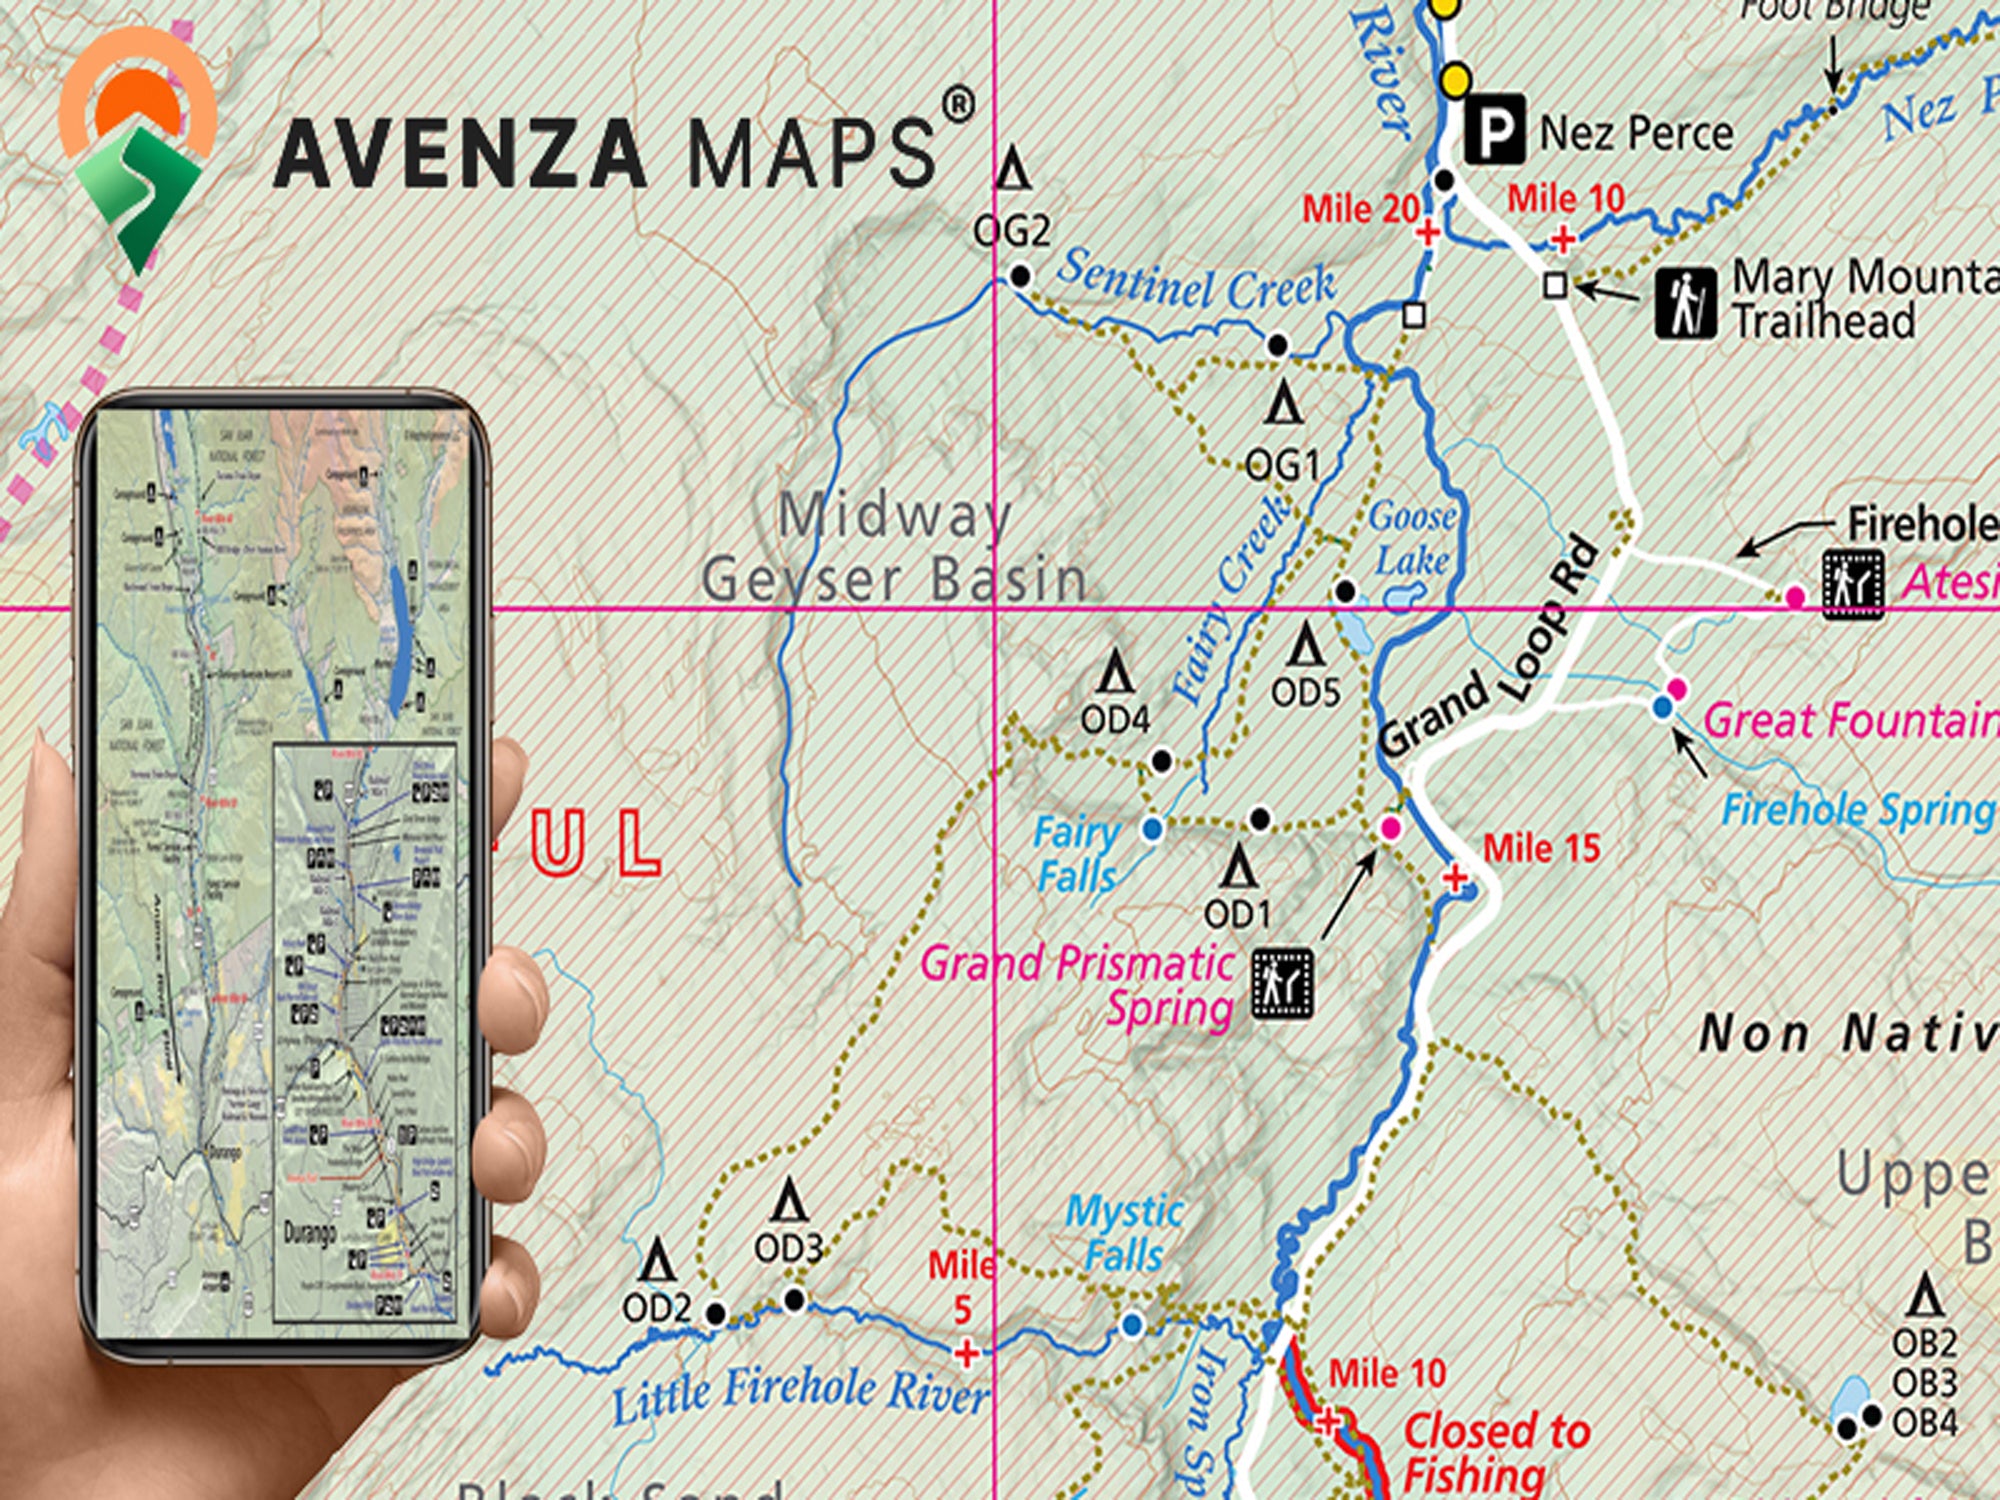 Animas River, Colorado Pocket Fishing Map